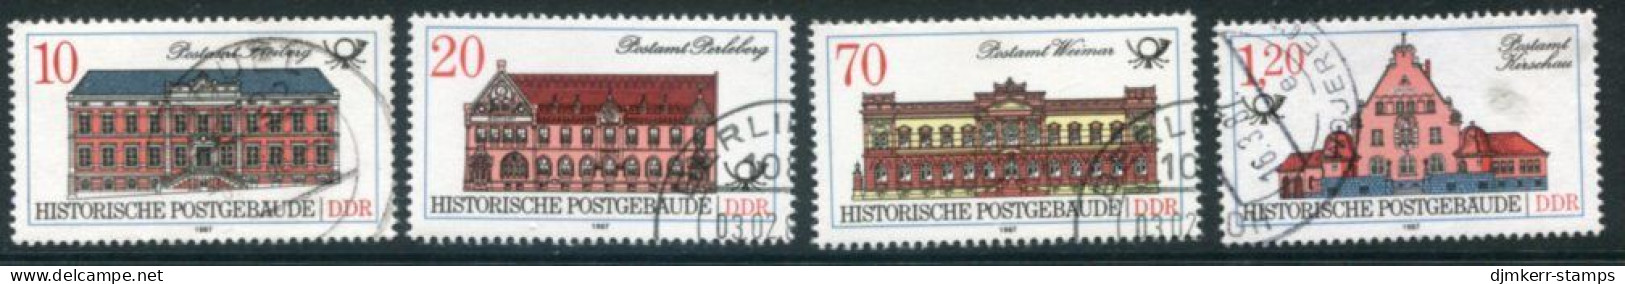 DDR 1987 Historic Postal Buildings Singles Used.  Michel 3067-70 - Gebraucht